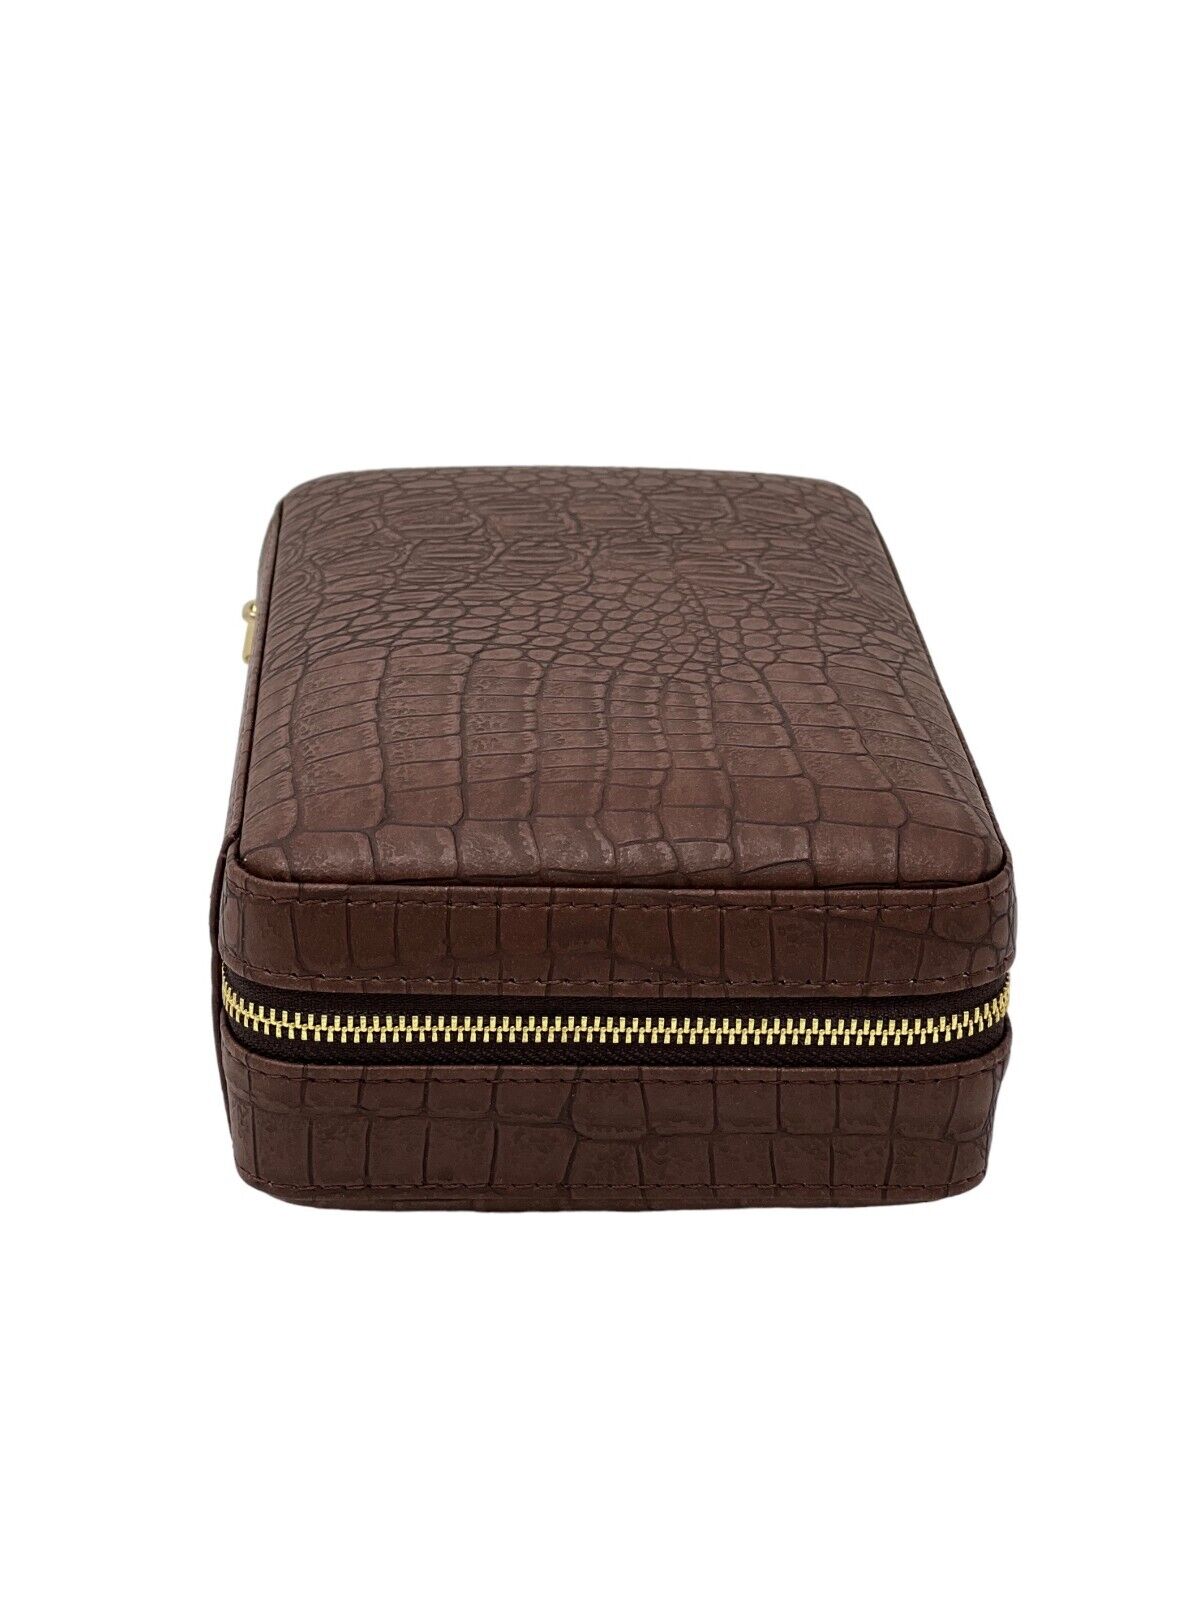 Premium Cigar Humidor  Case  Leather Cigar Travel Case with Cedar Wood